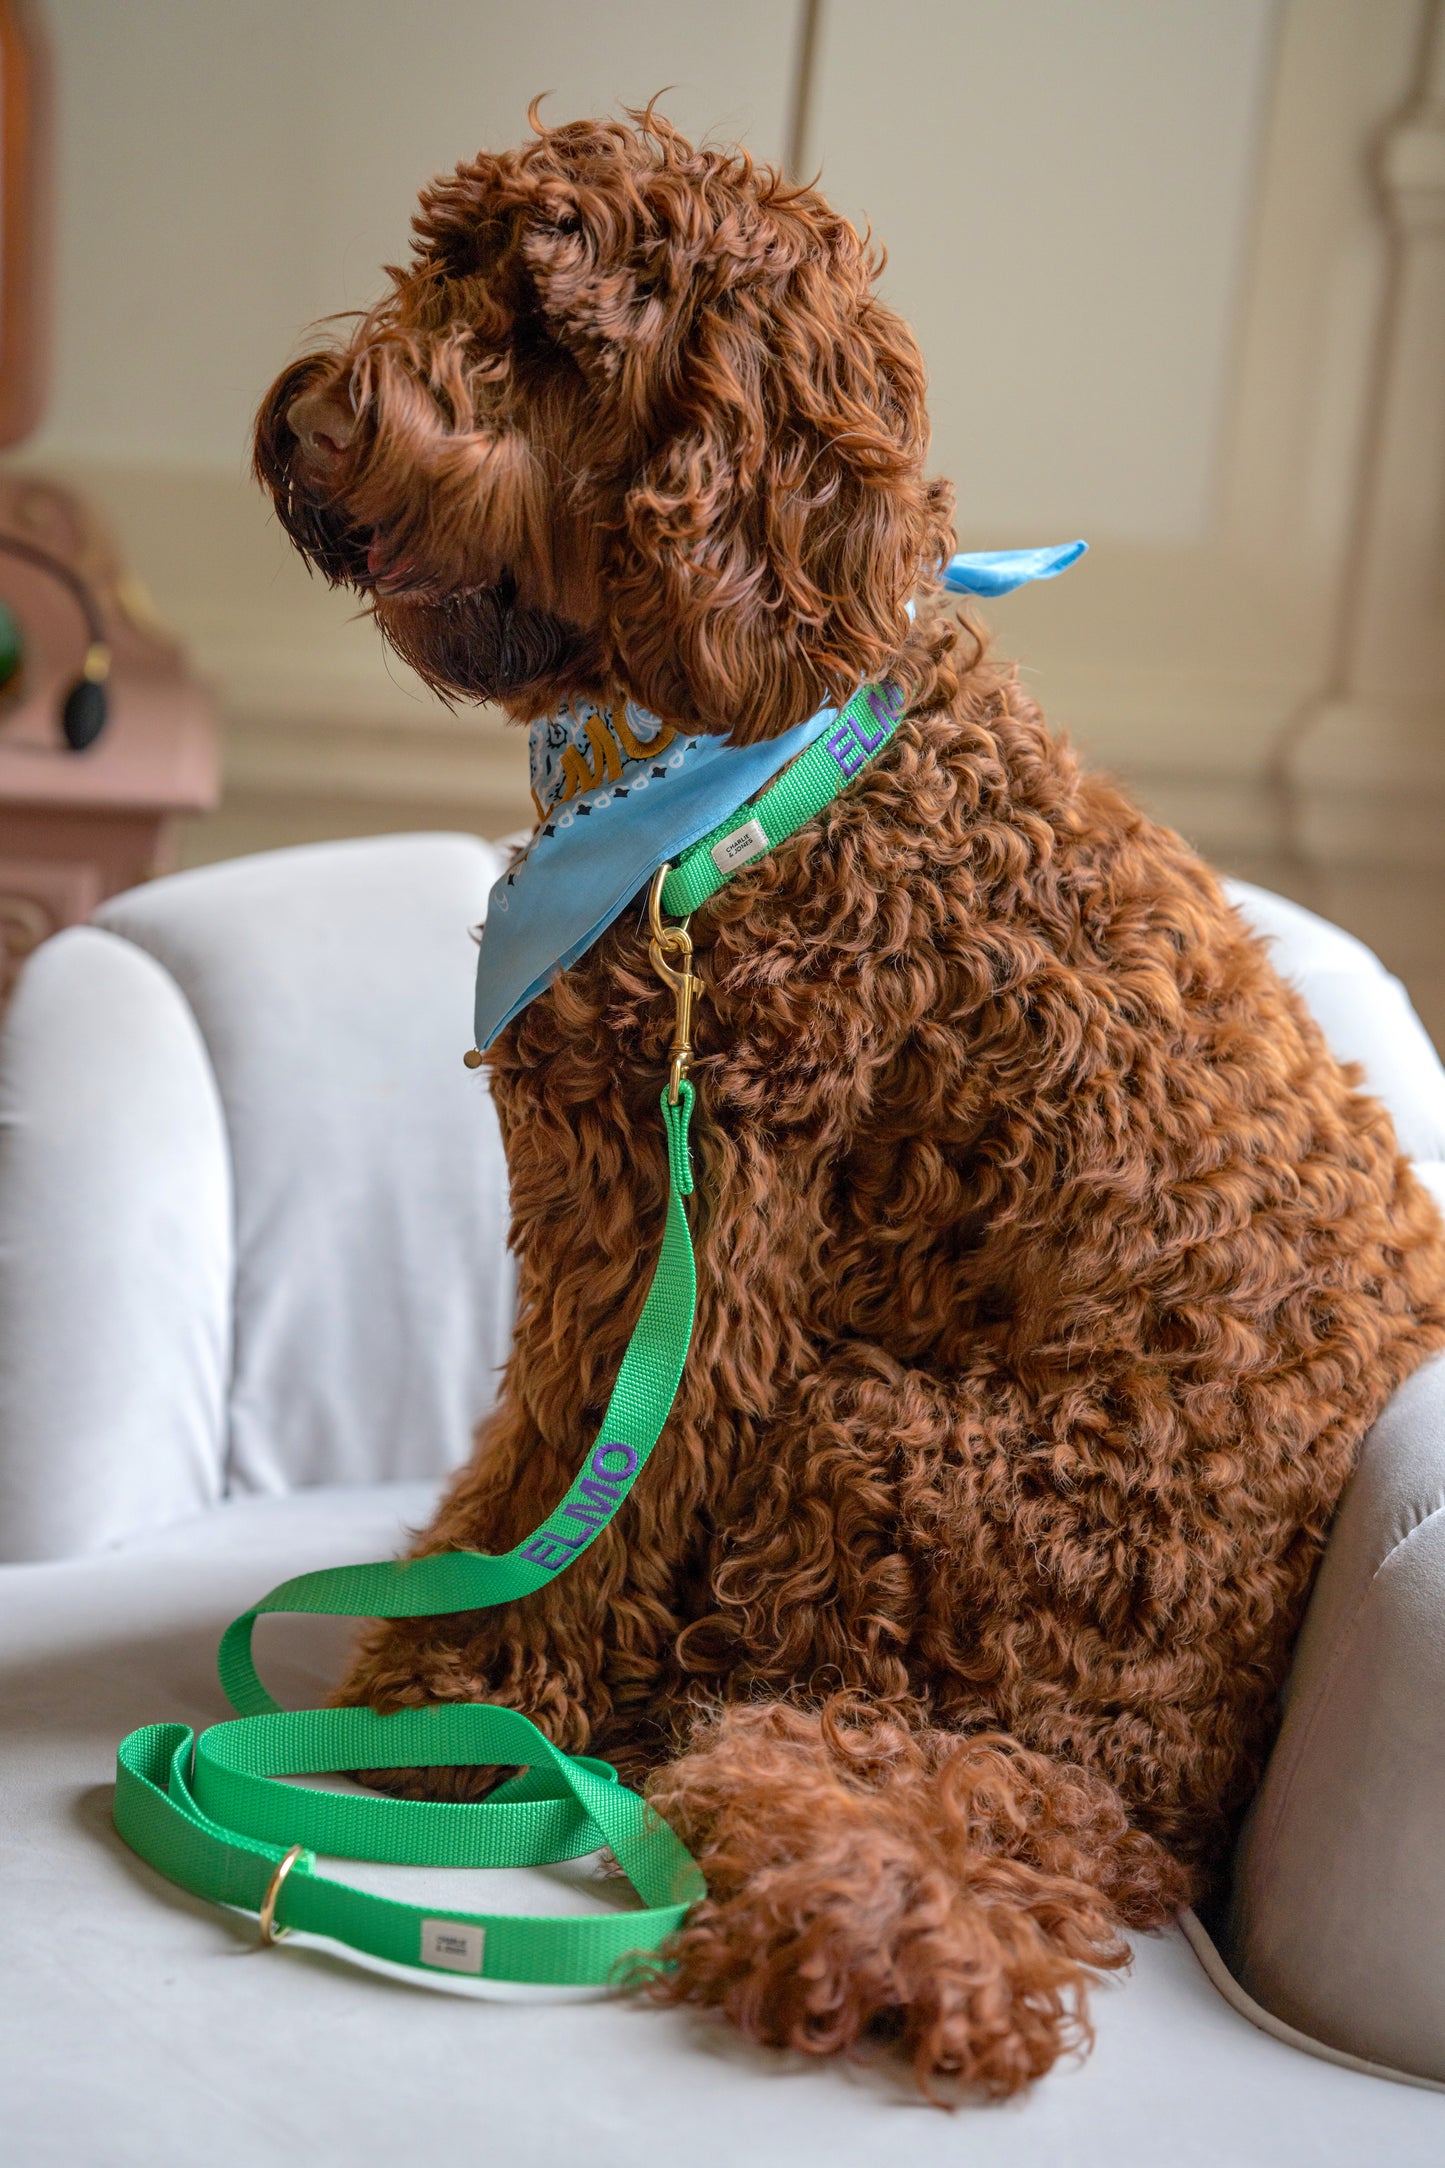 Puppy halsband met naam Spring Green